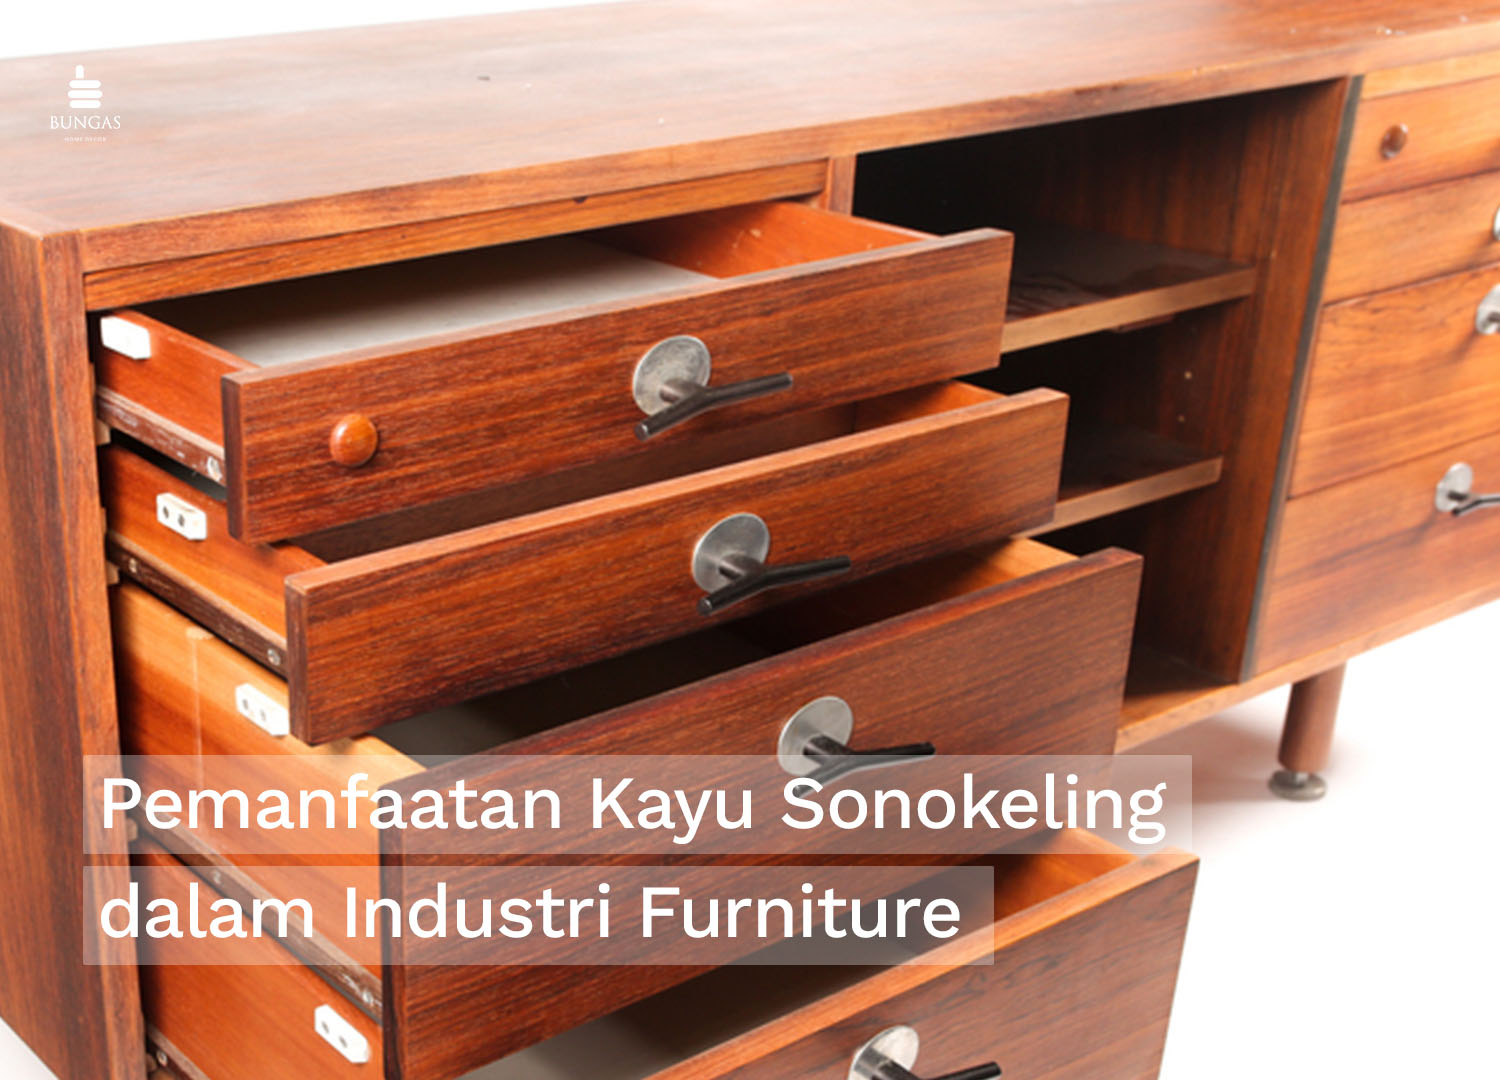 You are currently viewing Pemanfaatan Kayu Sonokeling dalam Industri Furniture